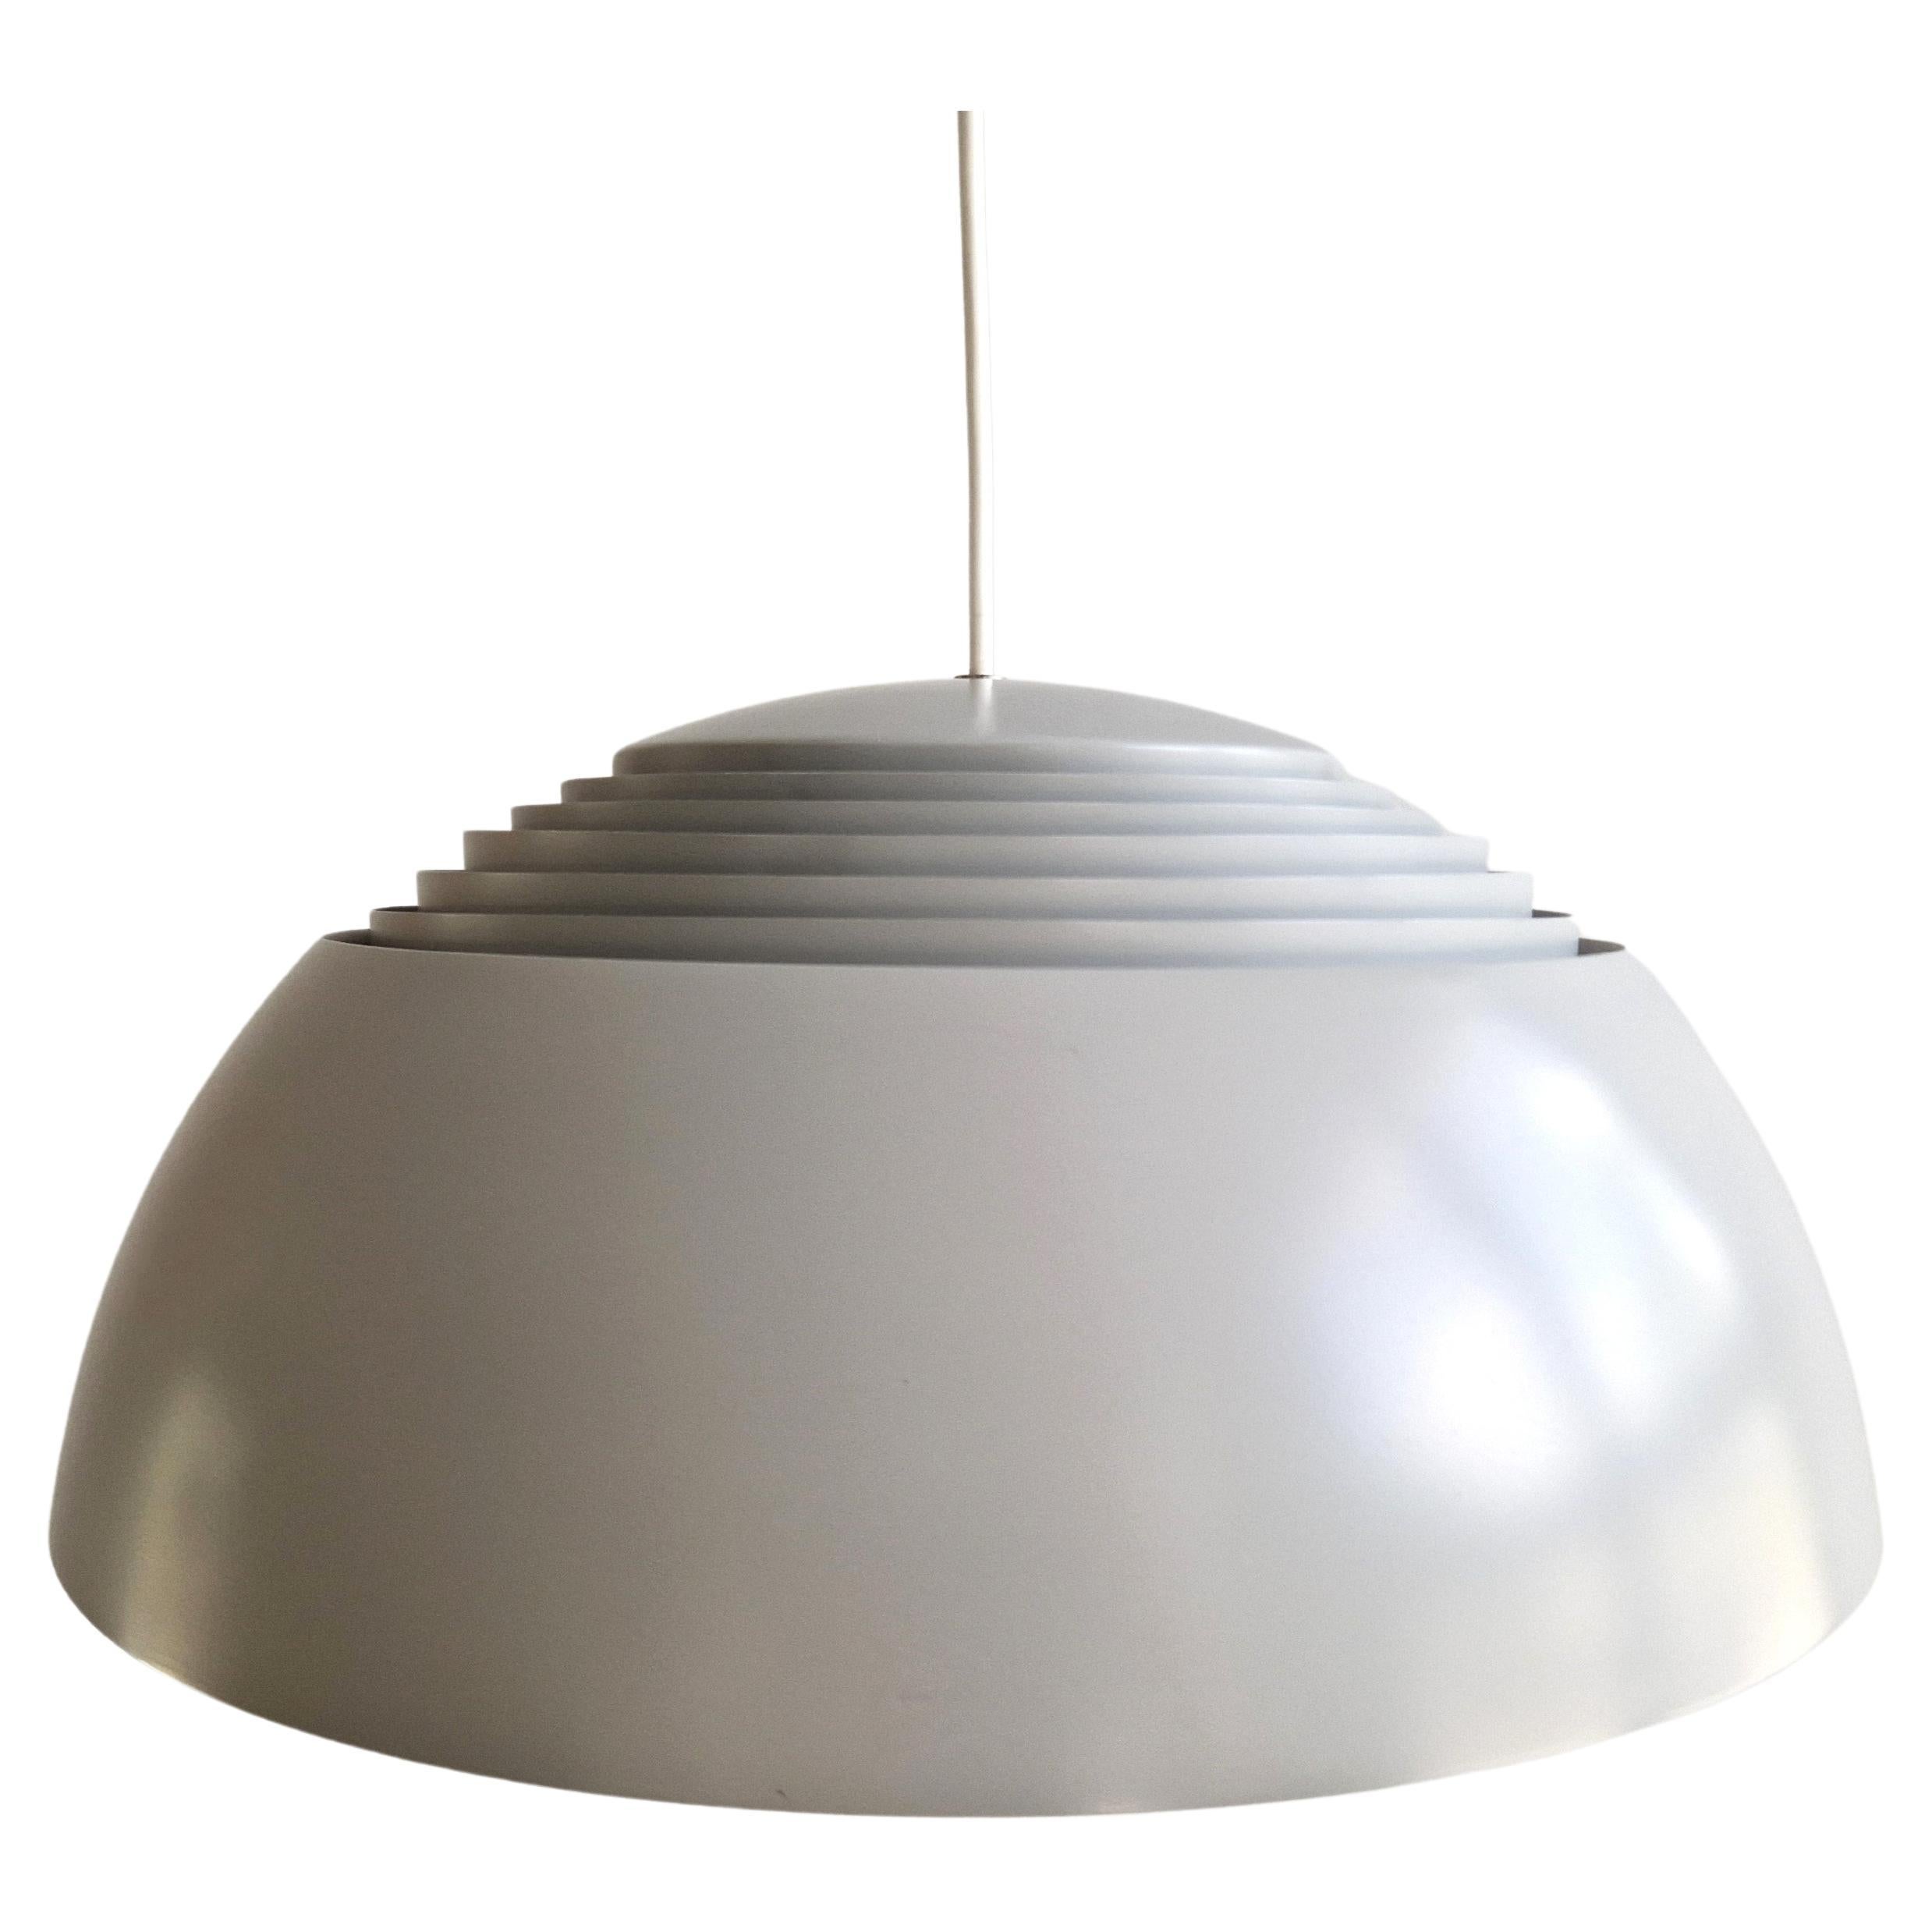 Light grey 'AJ Royal' pendant lamp by Arne Jacobsen for Sale at